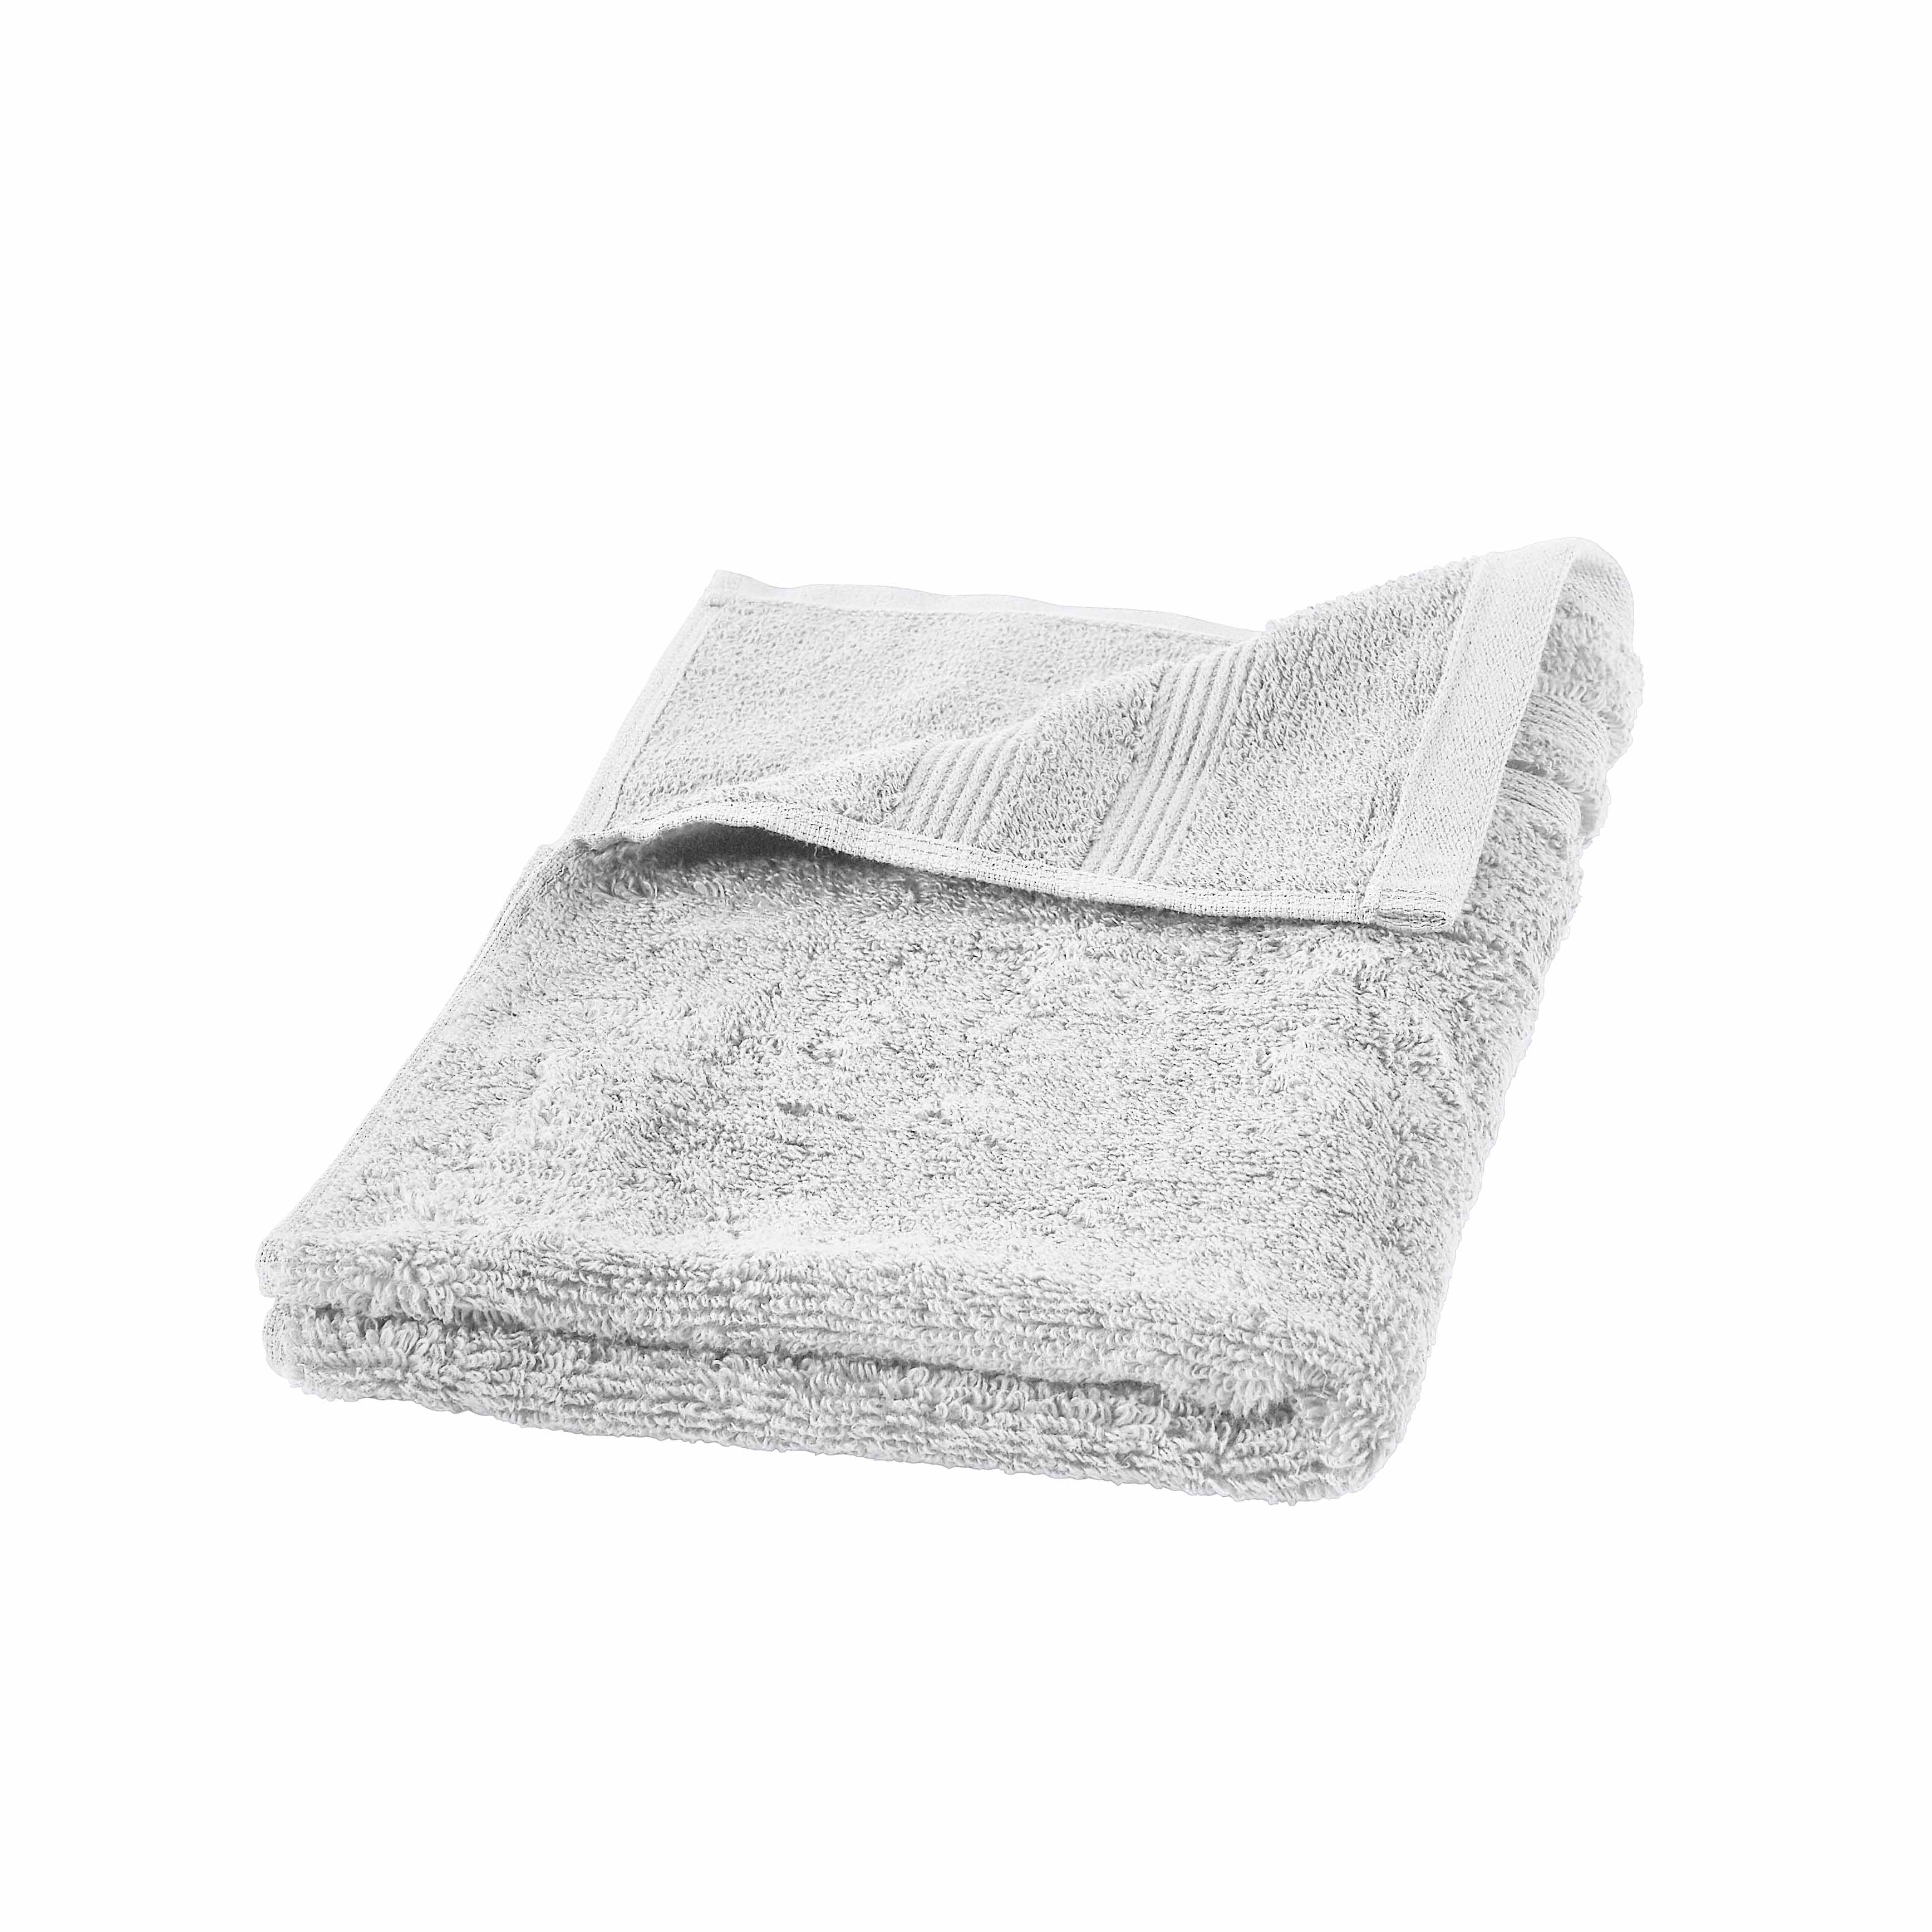 Black Bedding Heaven Pack of 6 Egyptian Cotton Guest Towels 40 cm x 60 cm 